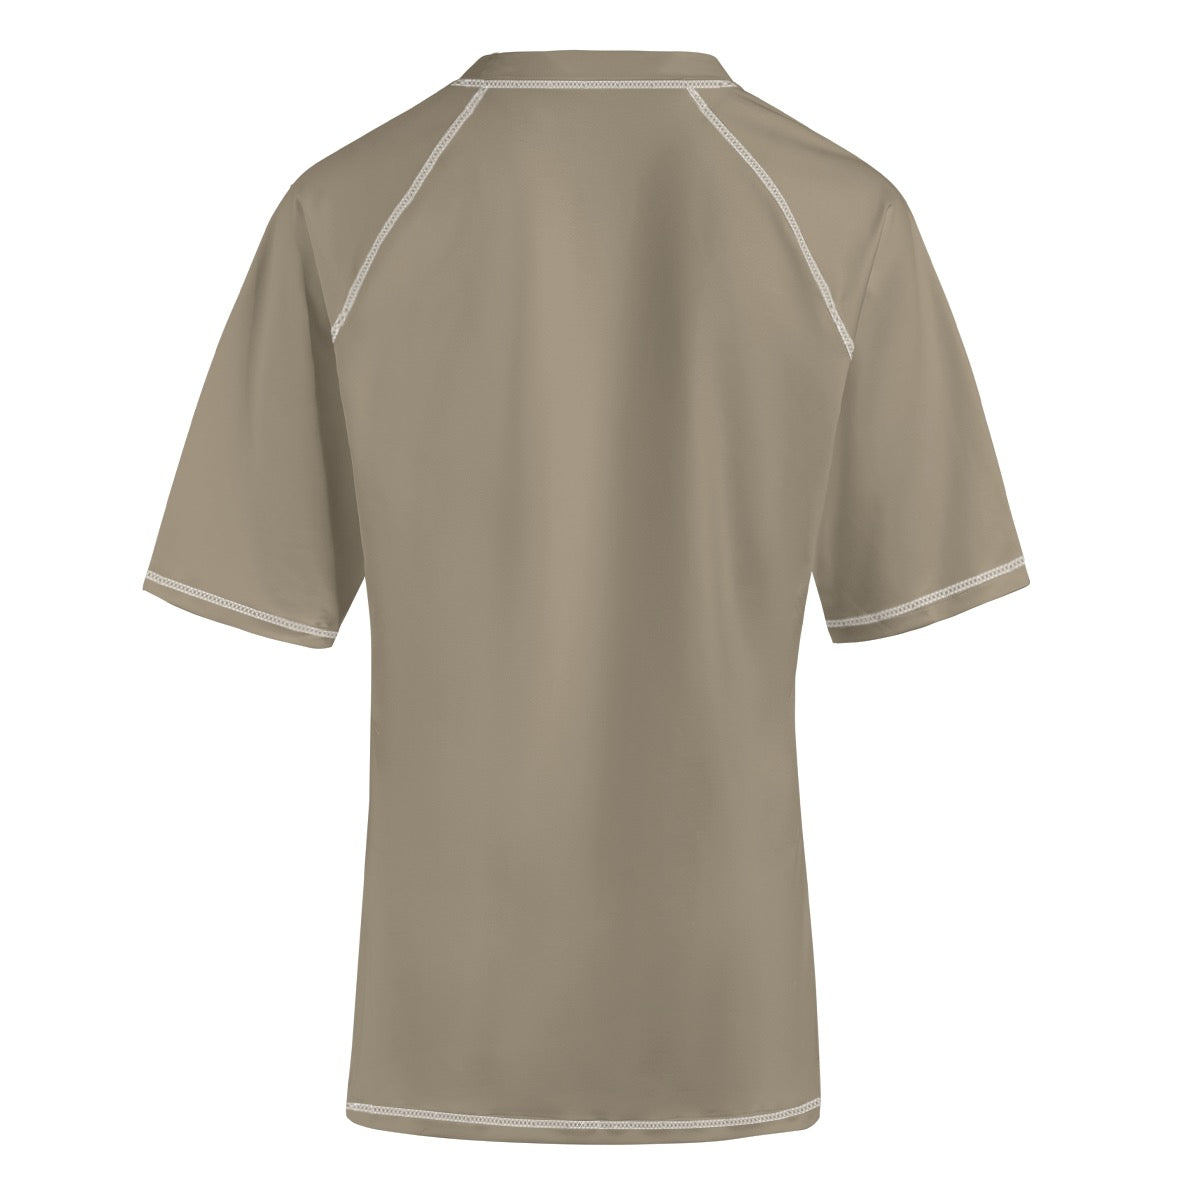 Haven Gate -- Unisex Yoga Sports Short Sleeve T-Shirt